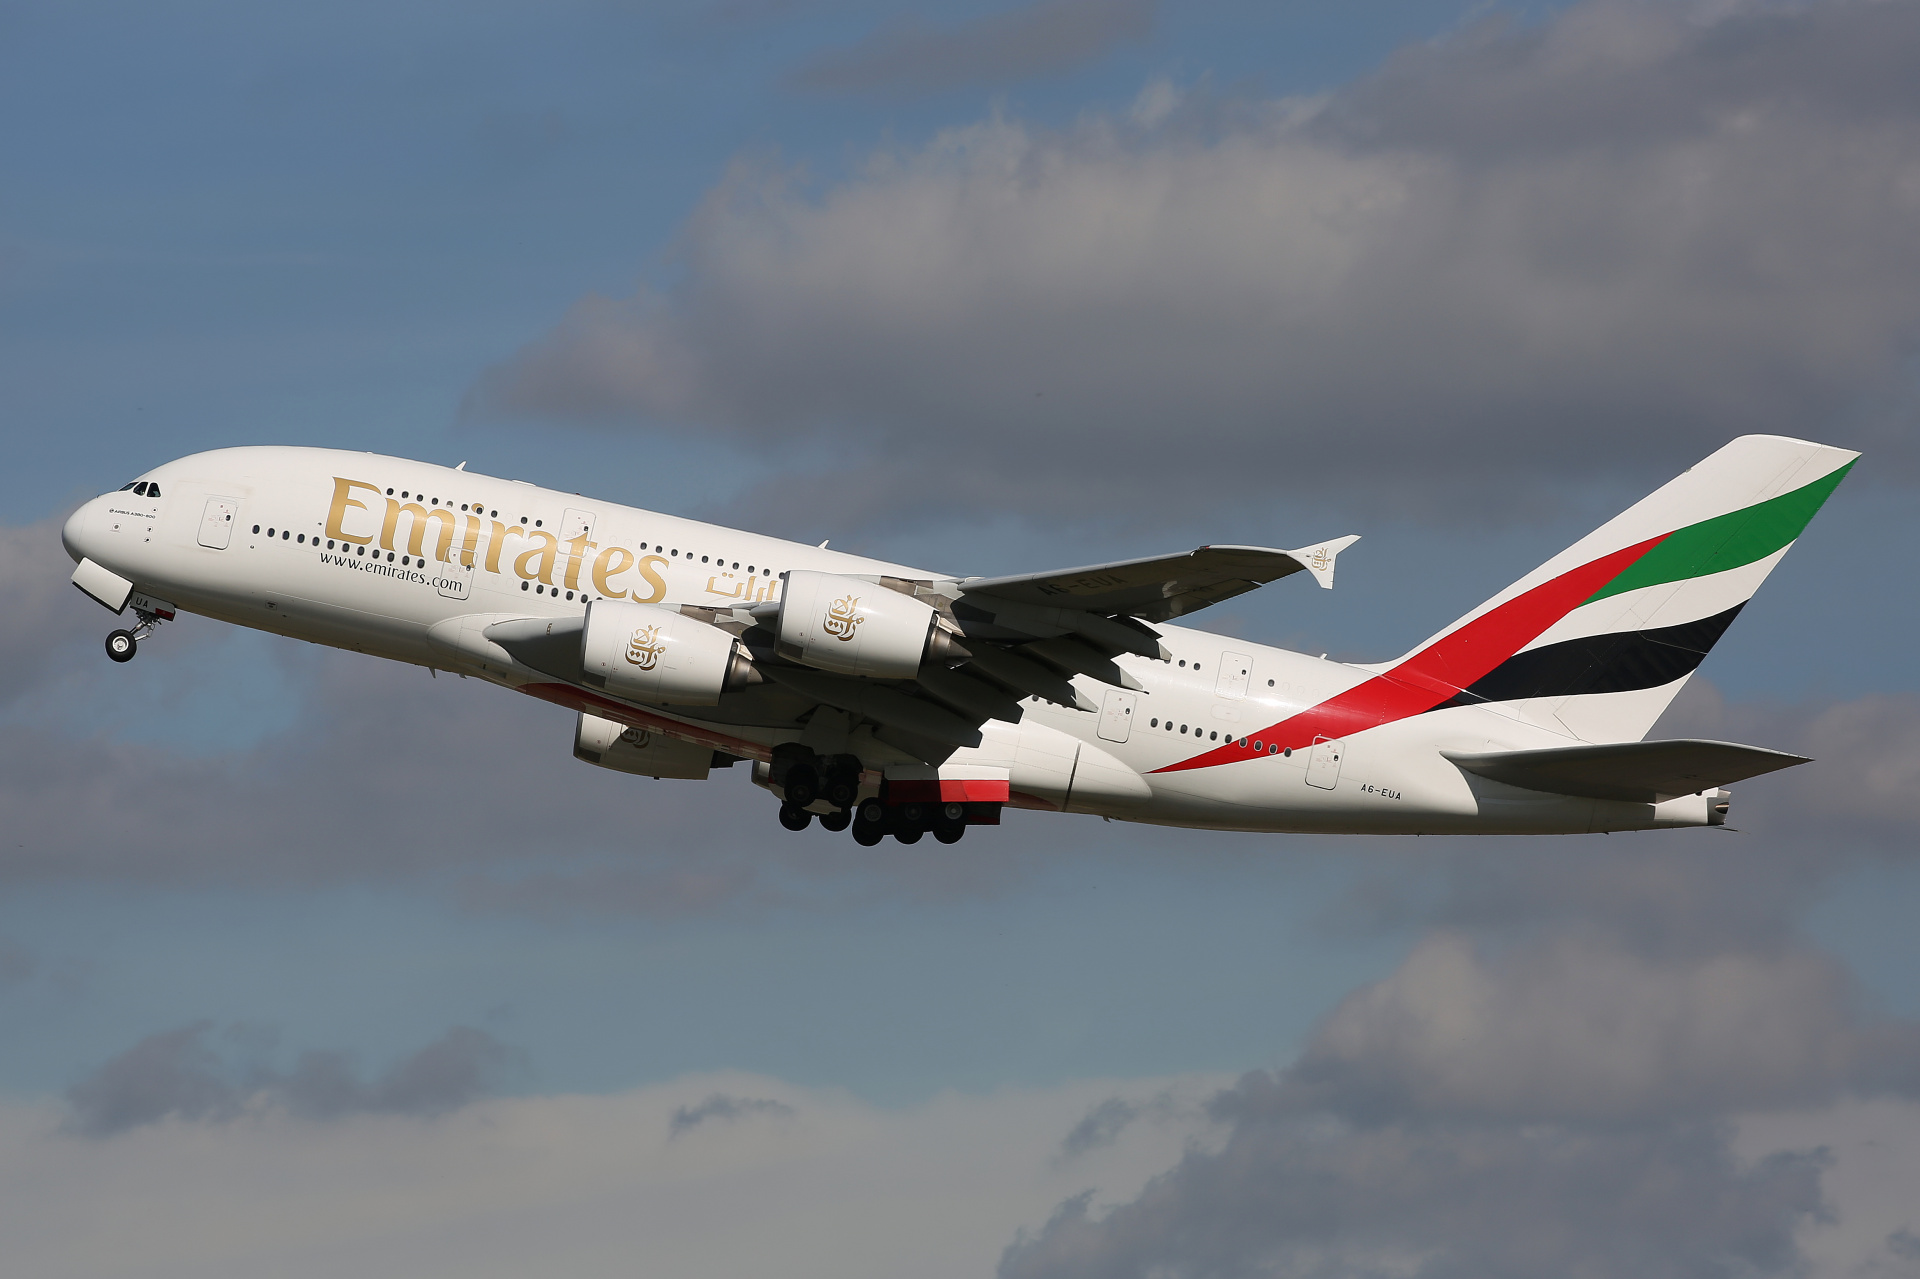 A6-EUA (Aircraft » Schiphol Spotting » Airbus A380-800 » Emirates)